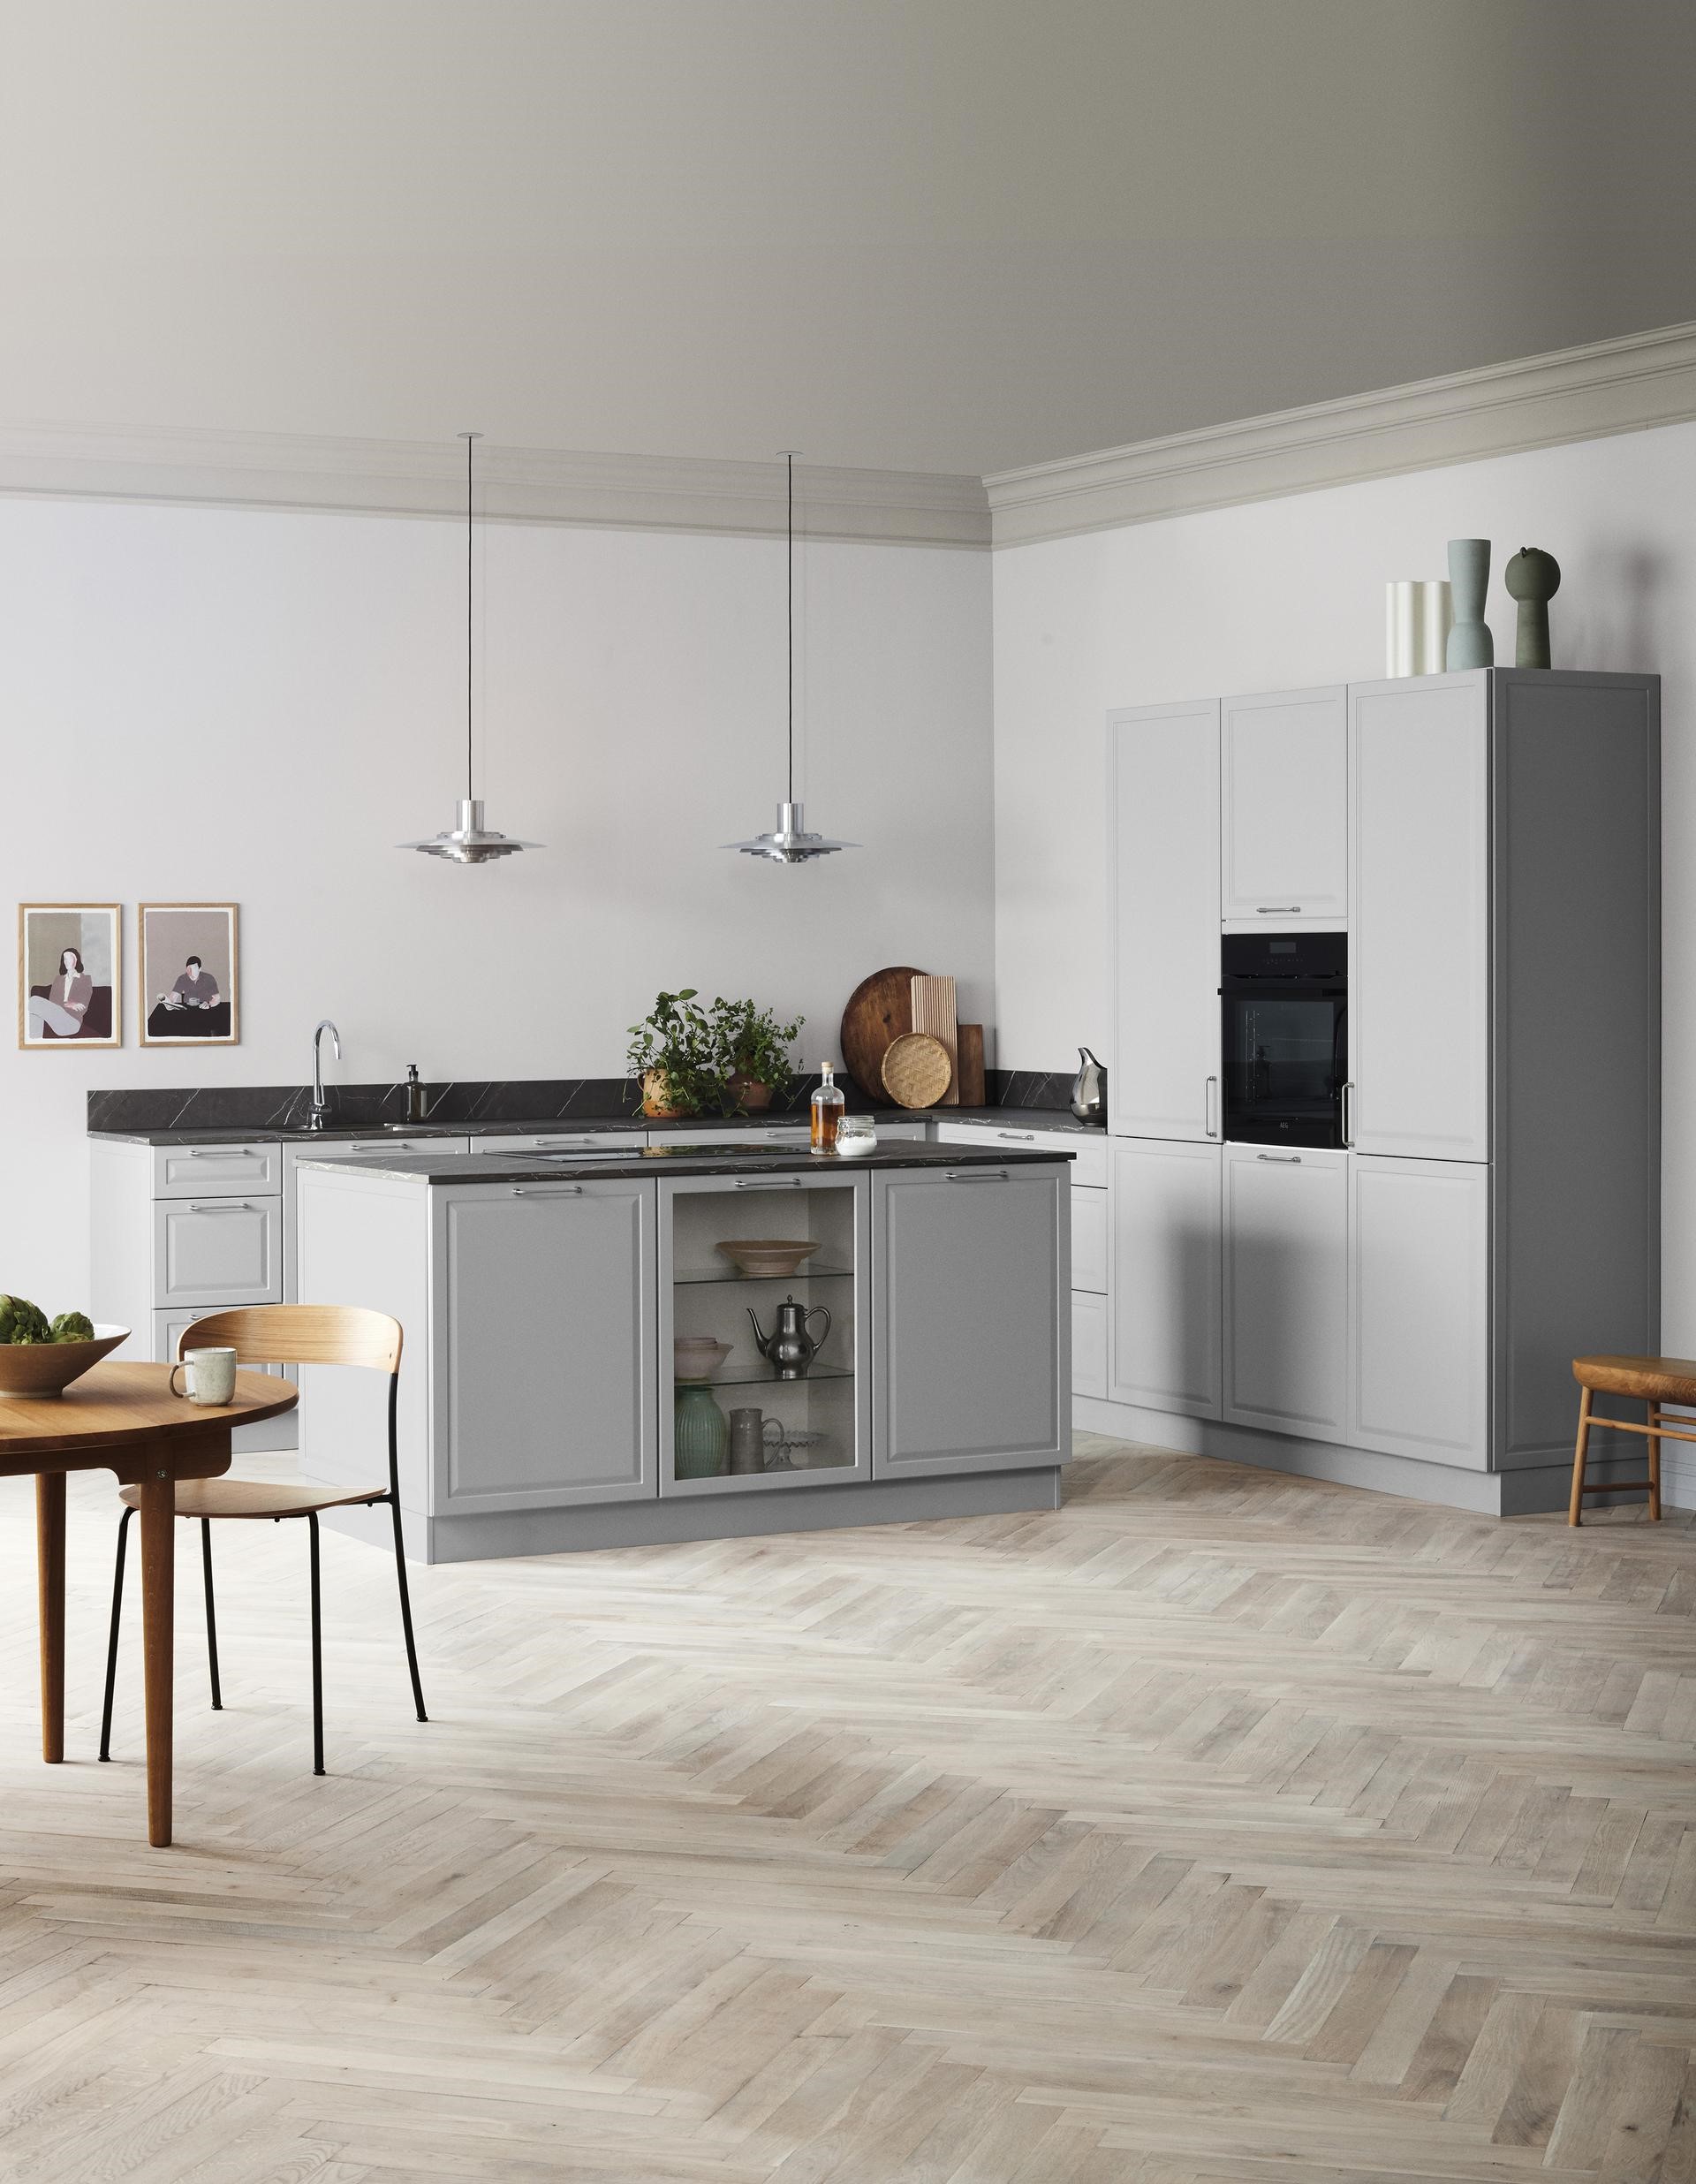 Kvik keukens, vooruitstrevend Deens design